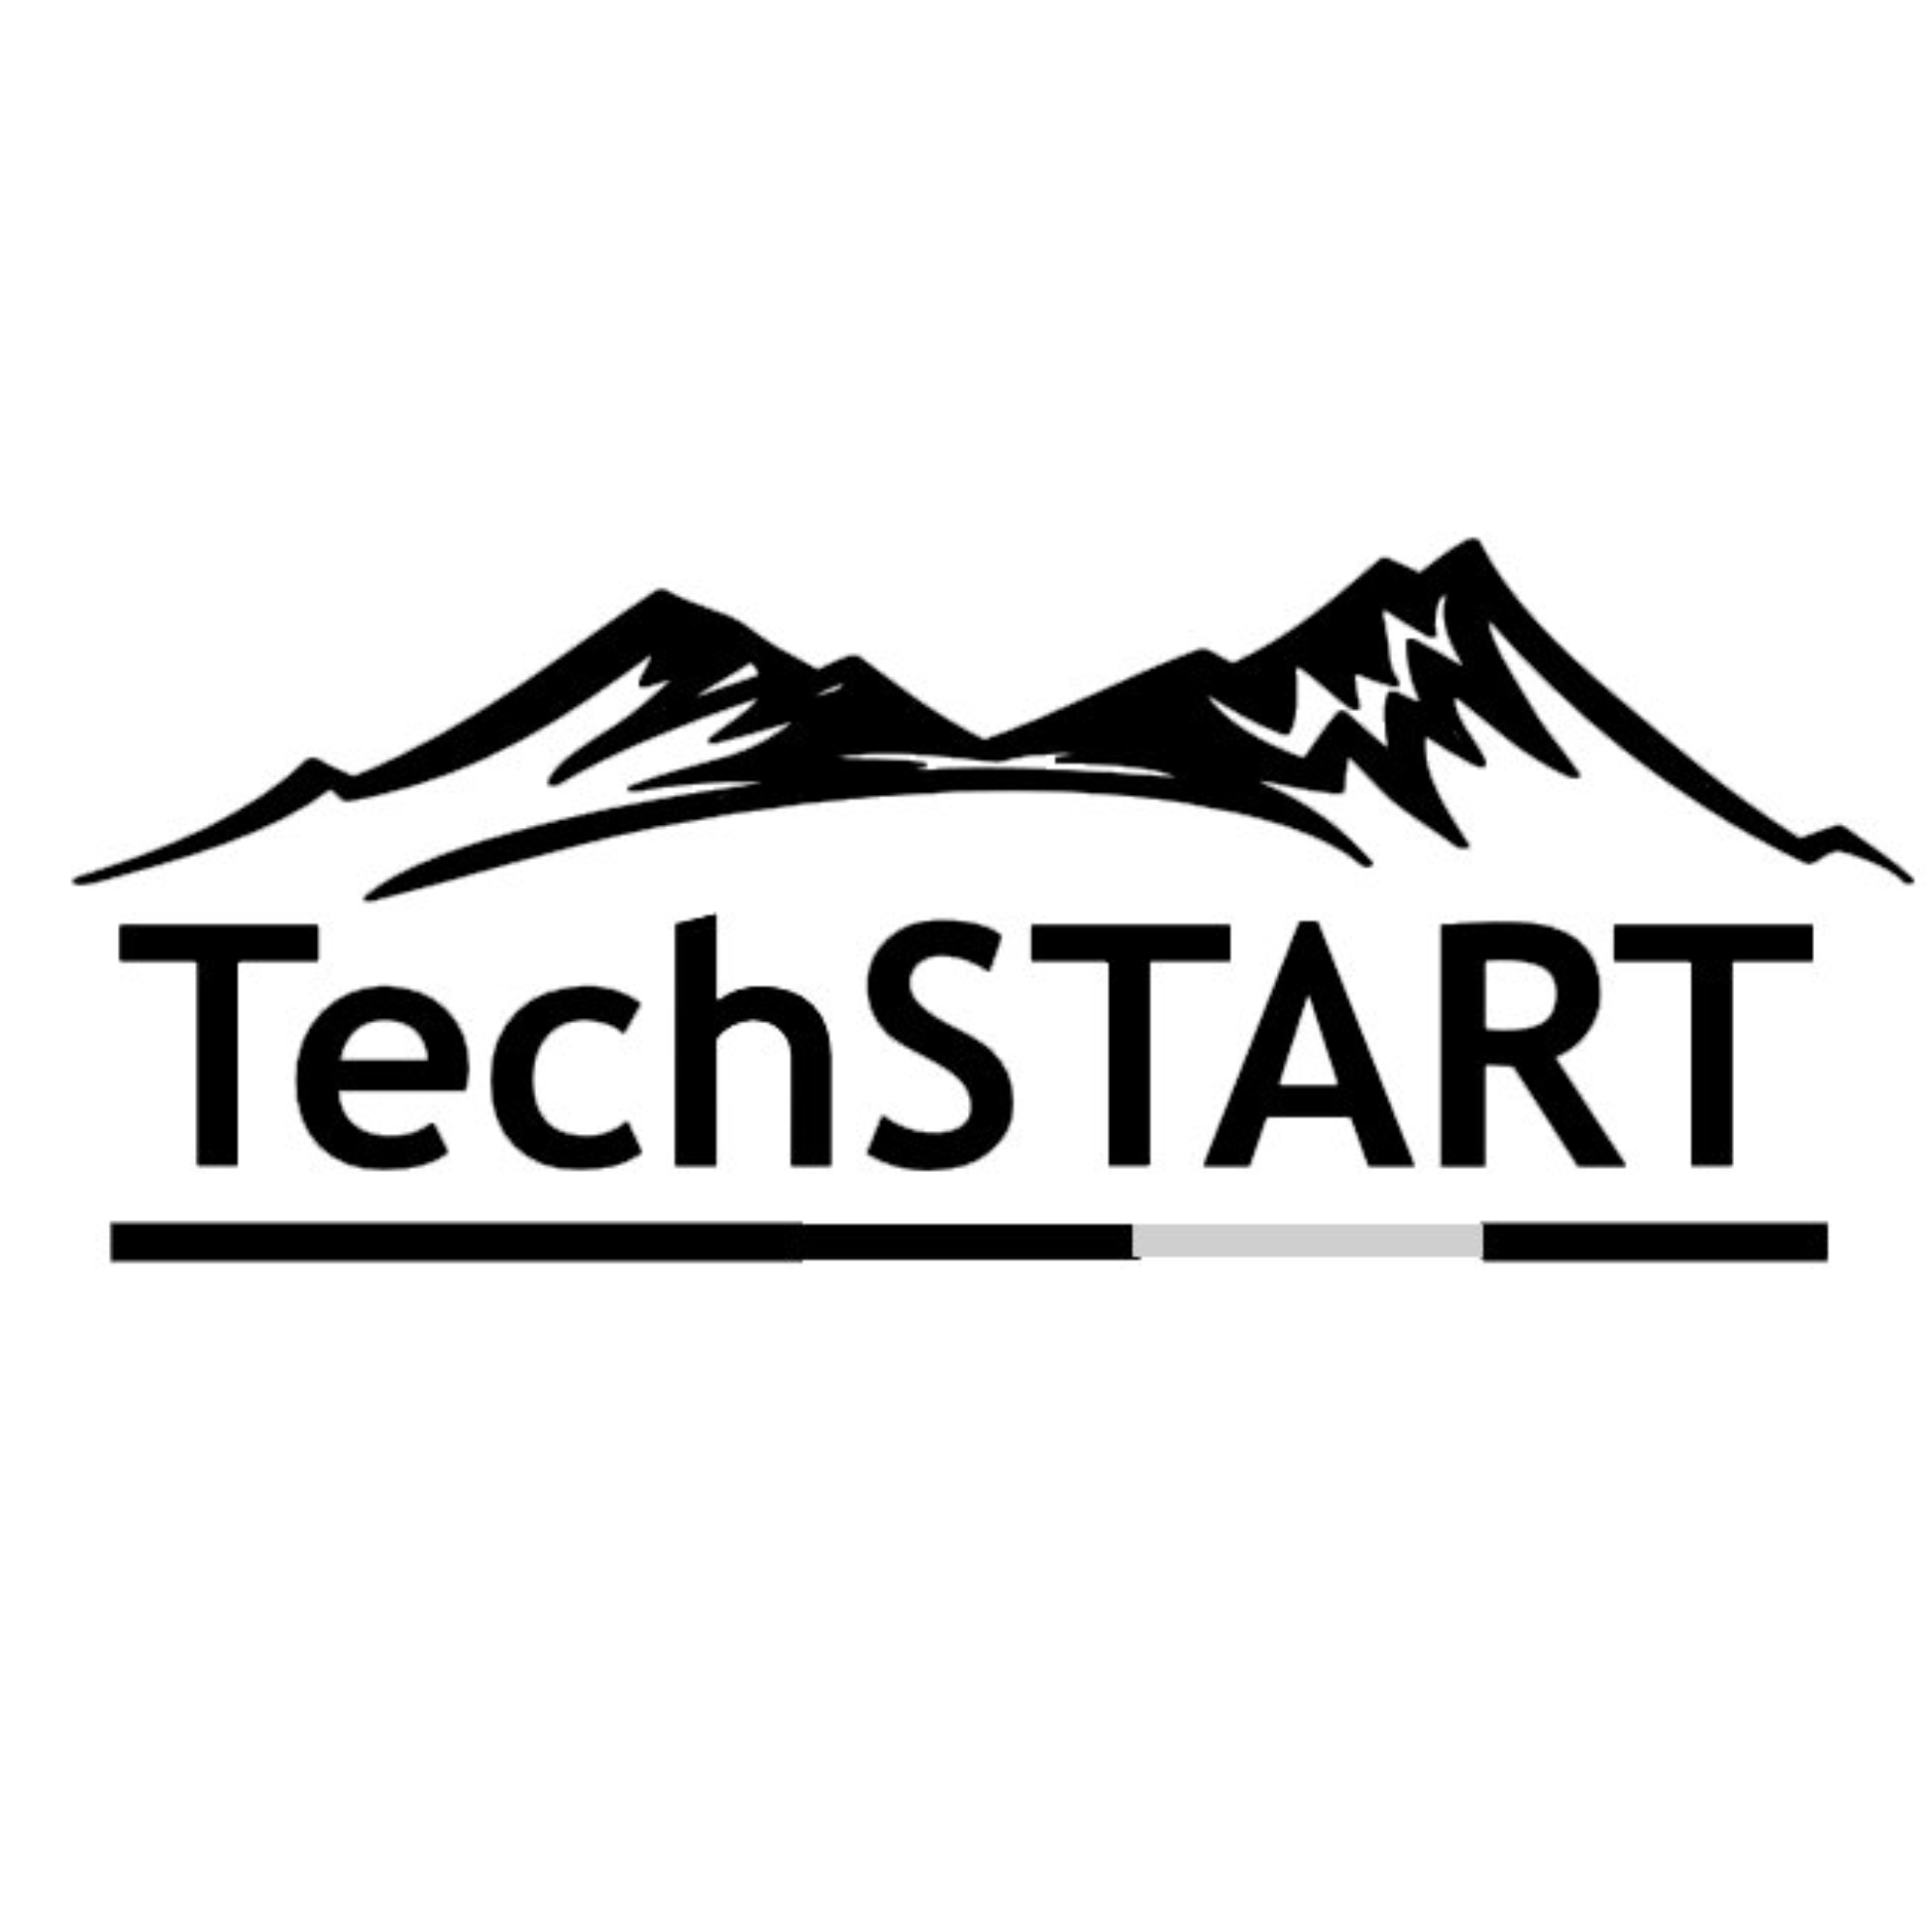 Techstart logo.png